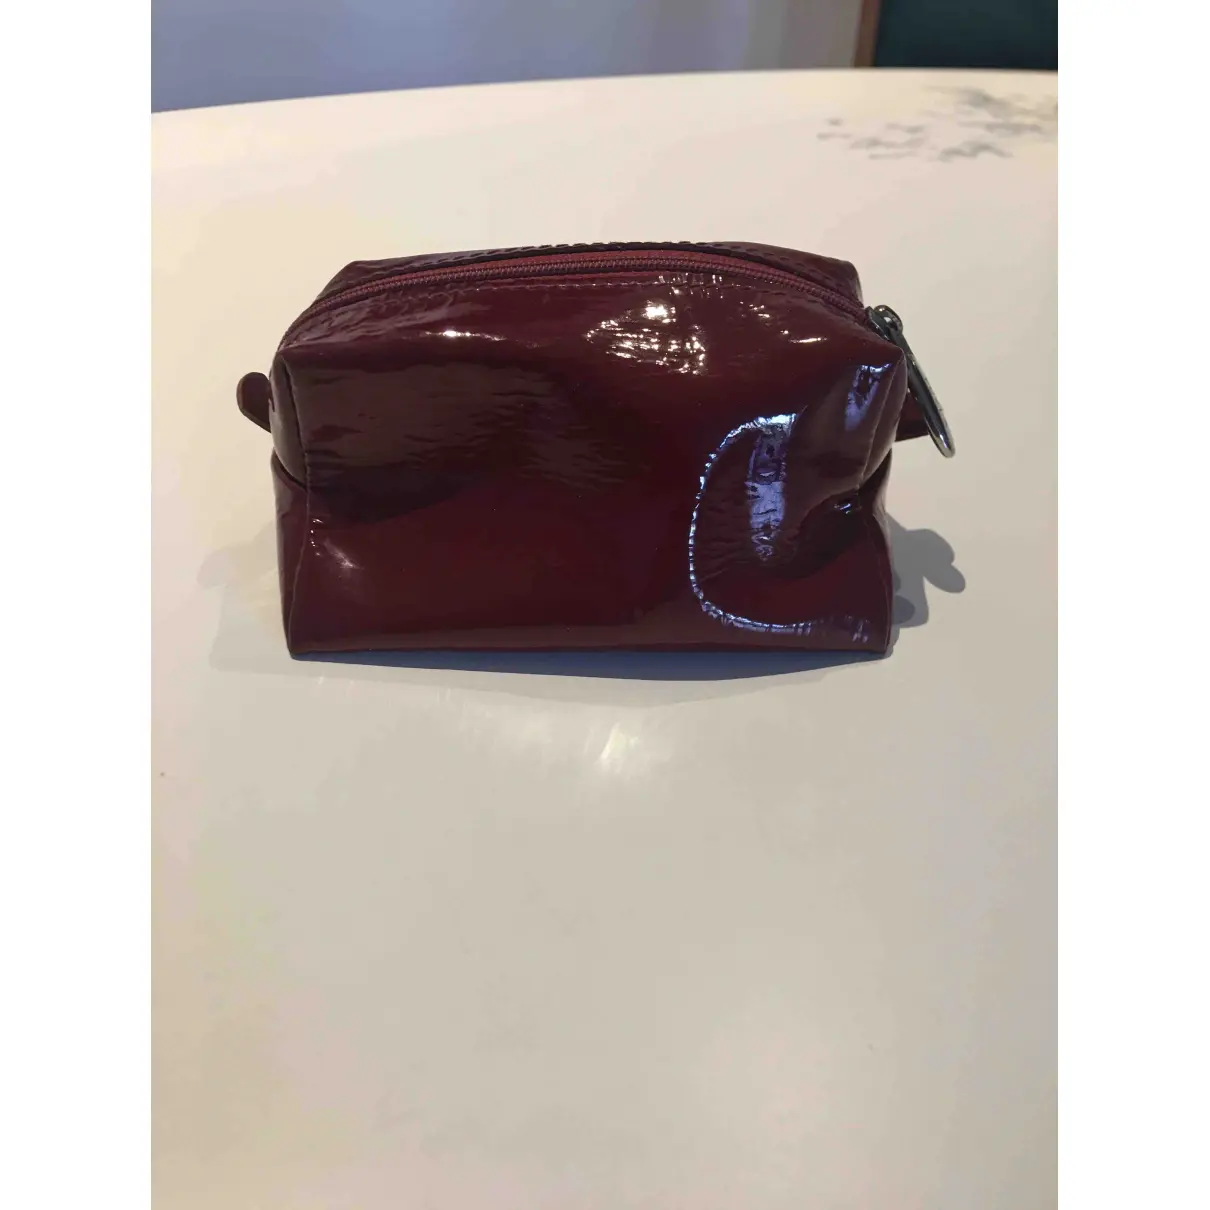 Buy Furla Patent leather purse online